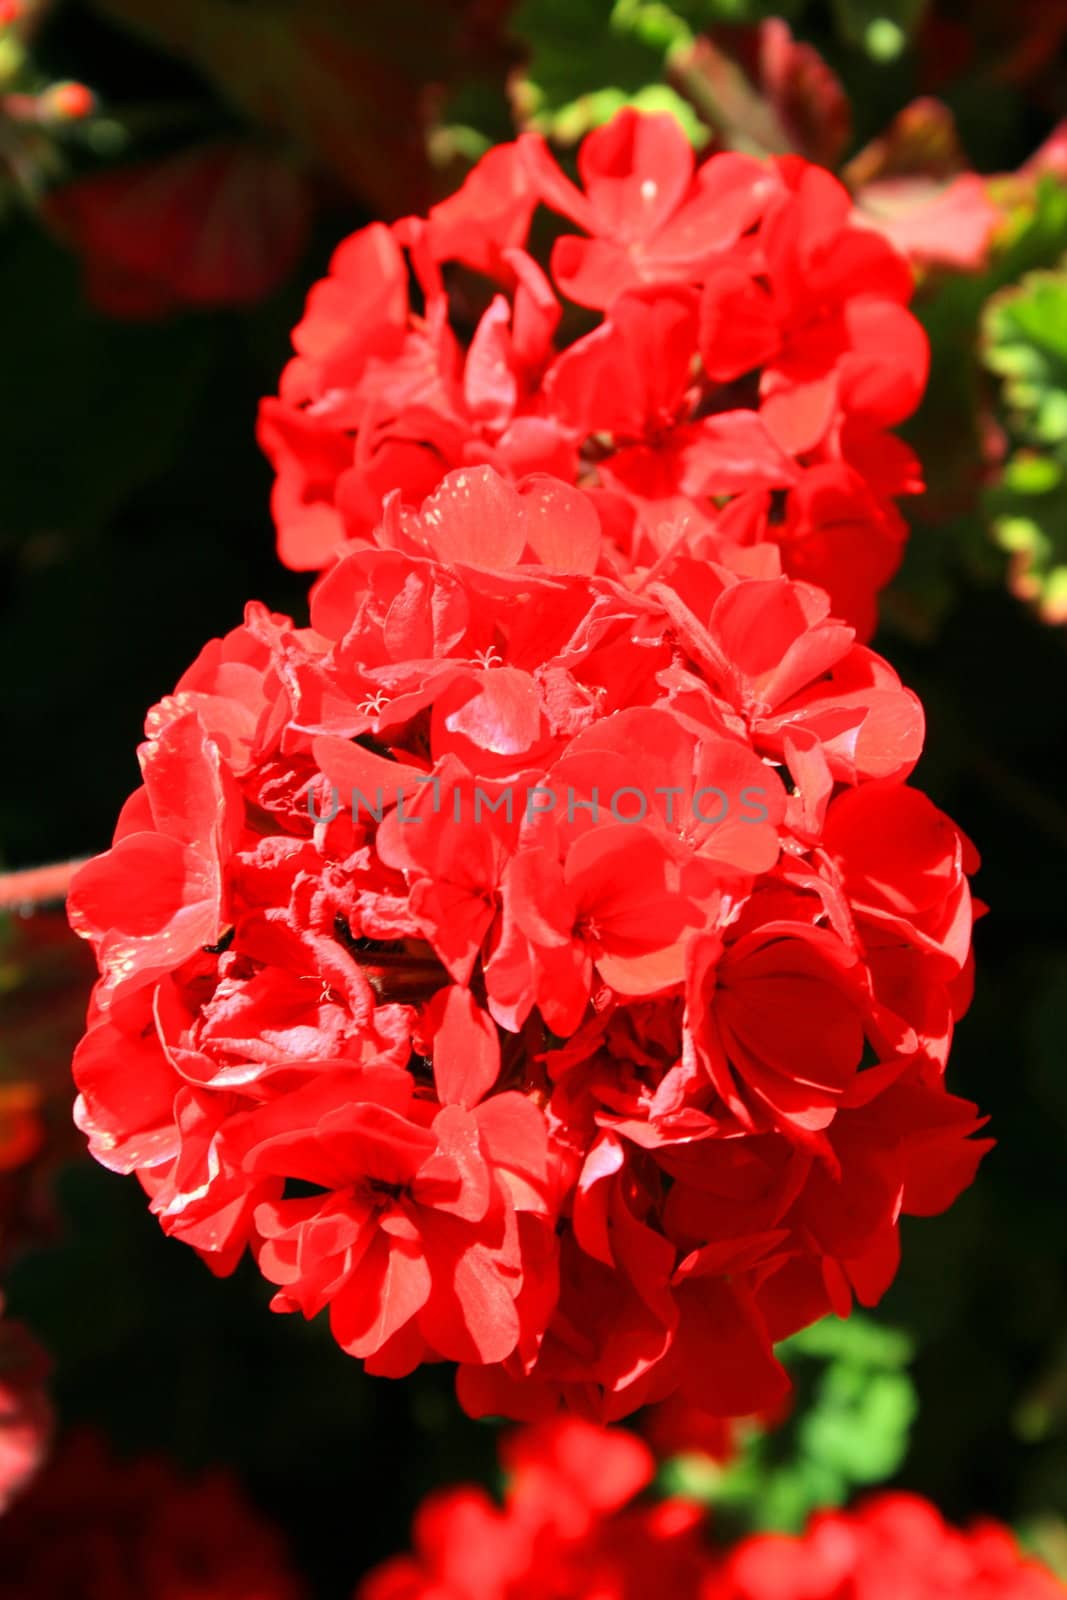 Red Geranium Flowers by MichaelFelix